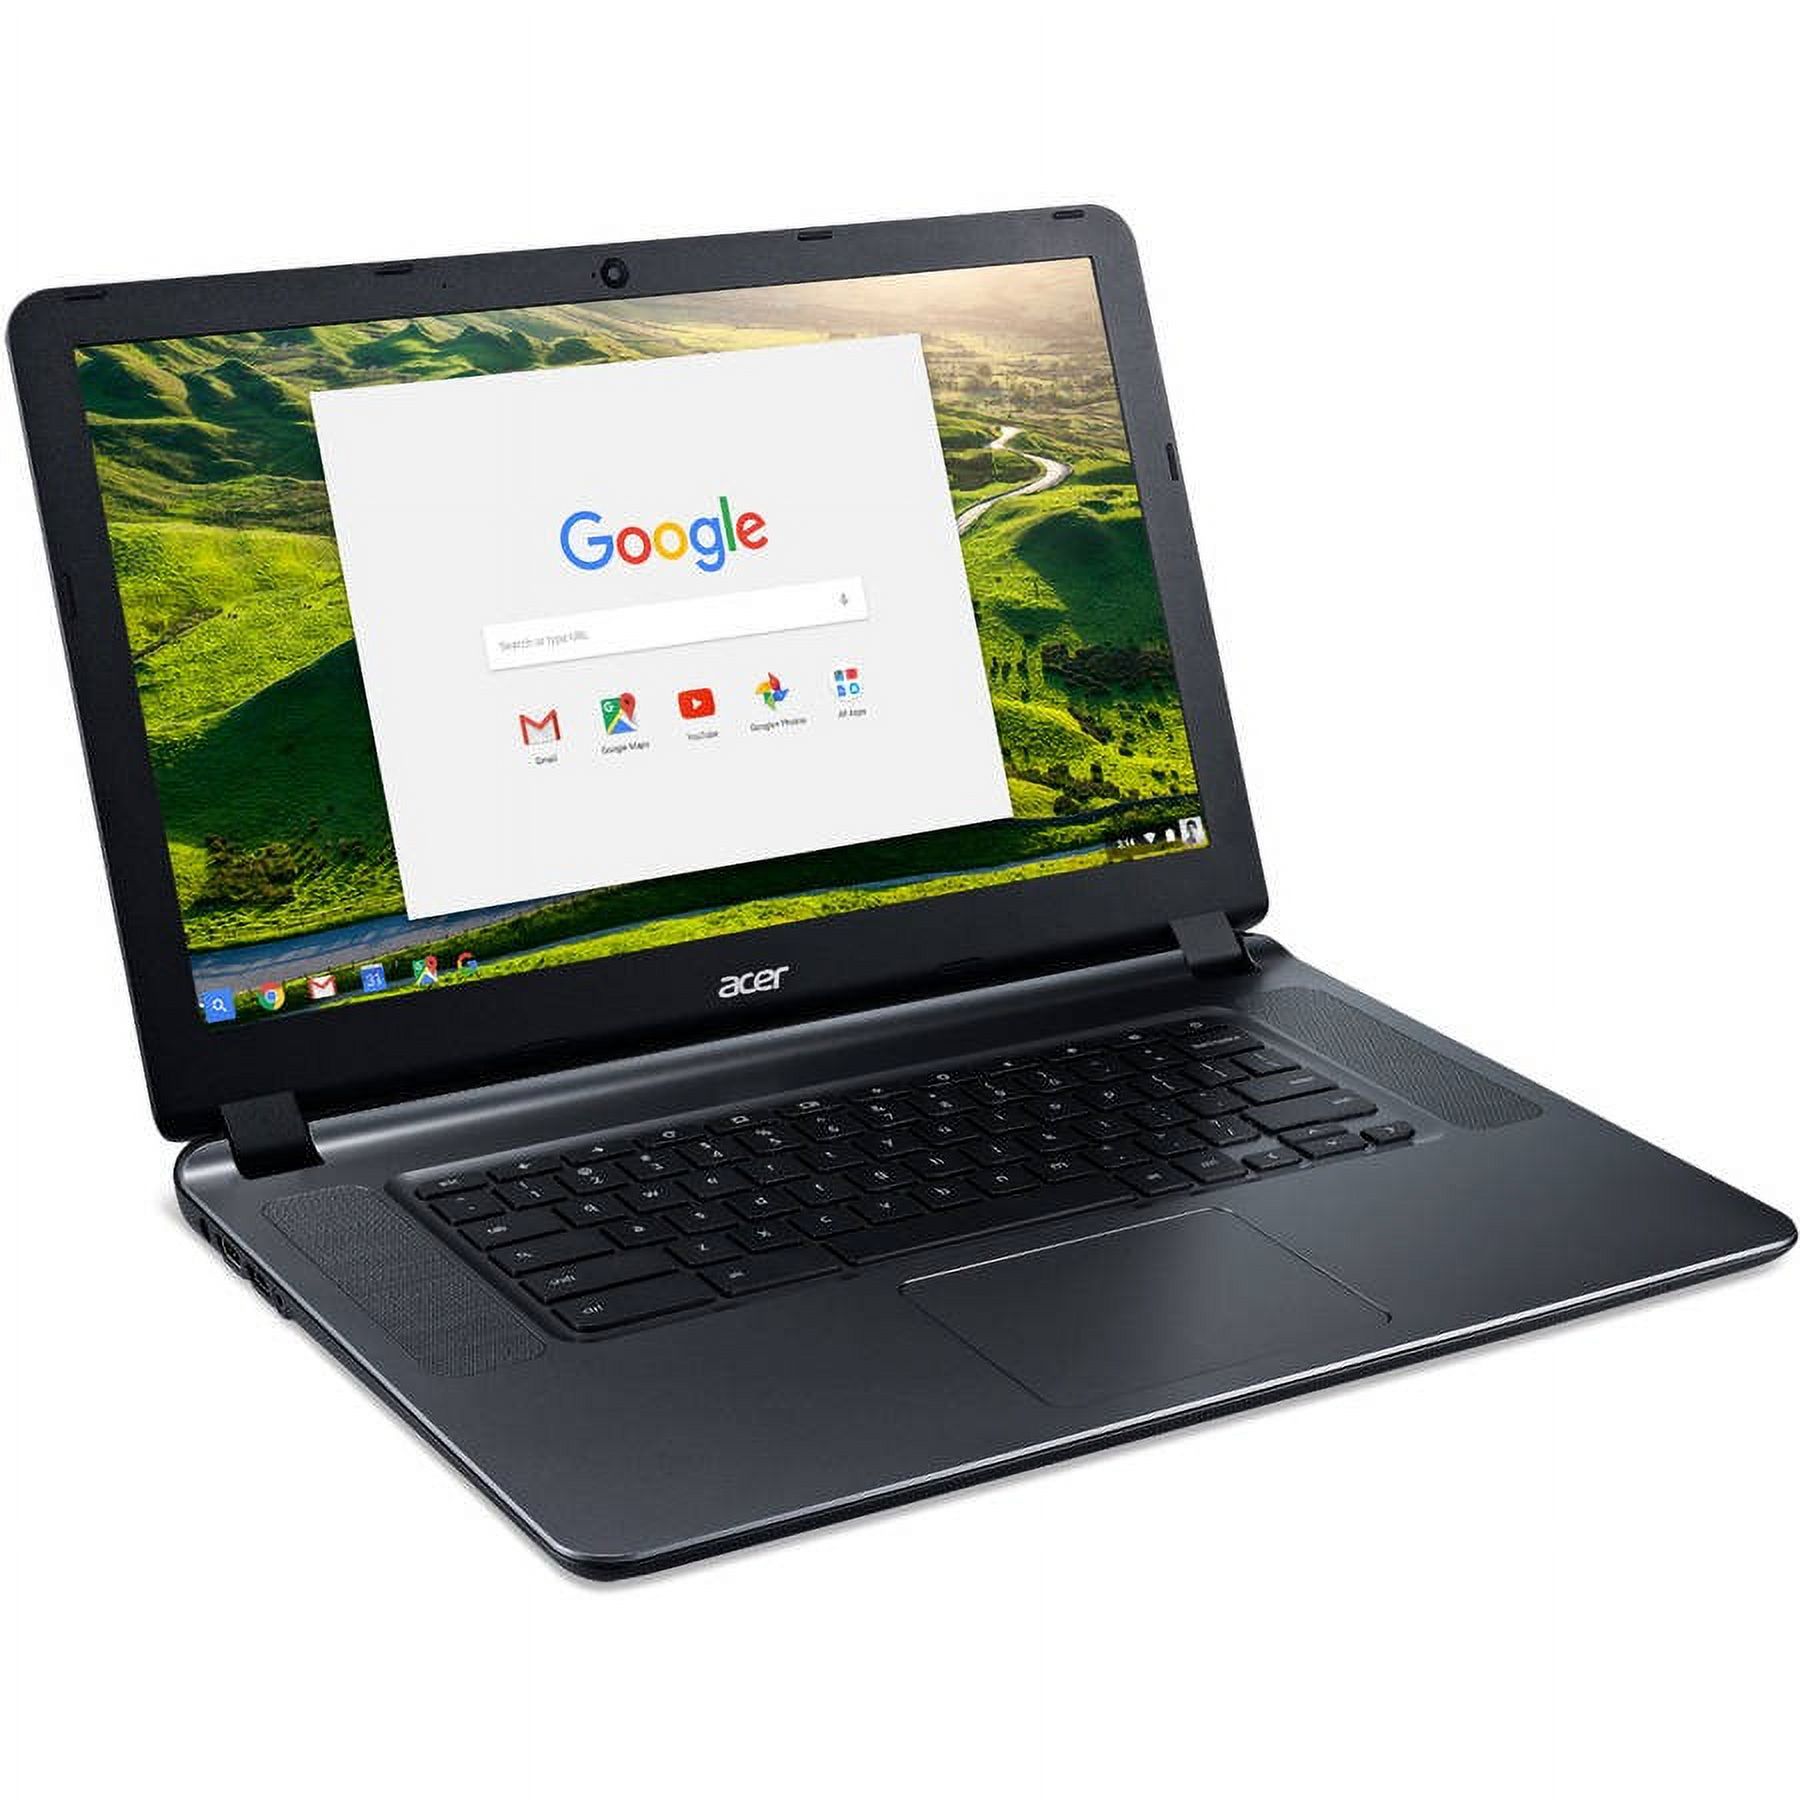 Acer CB3-532-C47C 15.6" Chromebook, Intel Celeron N3060 Dual-Core Processor, 2GB RAM, 16GB Internal Storage, Chrome OS - image 1 of 7